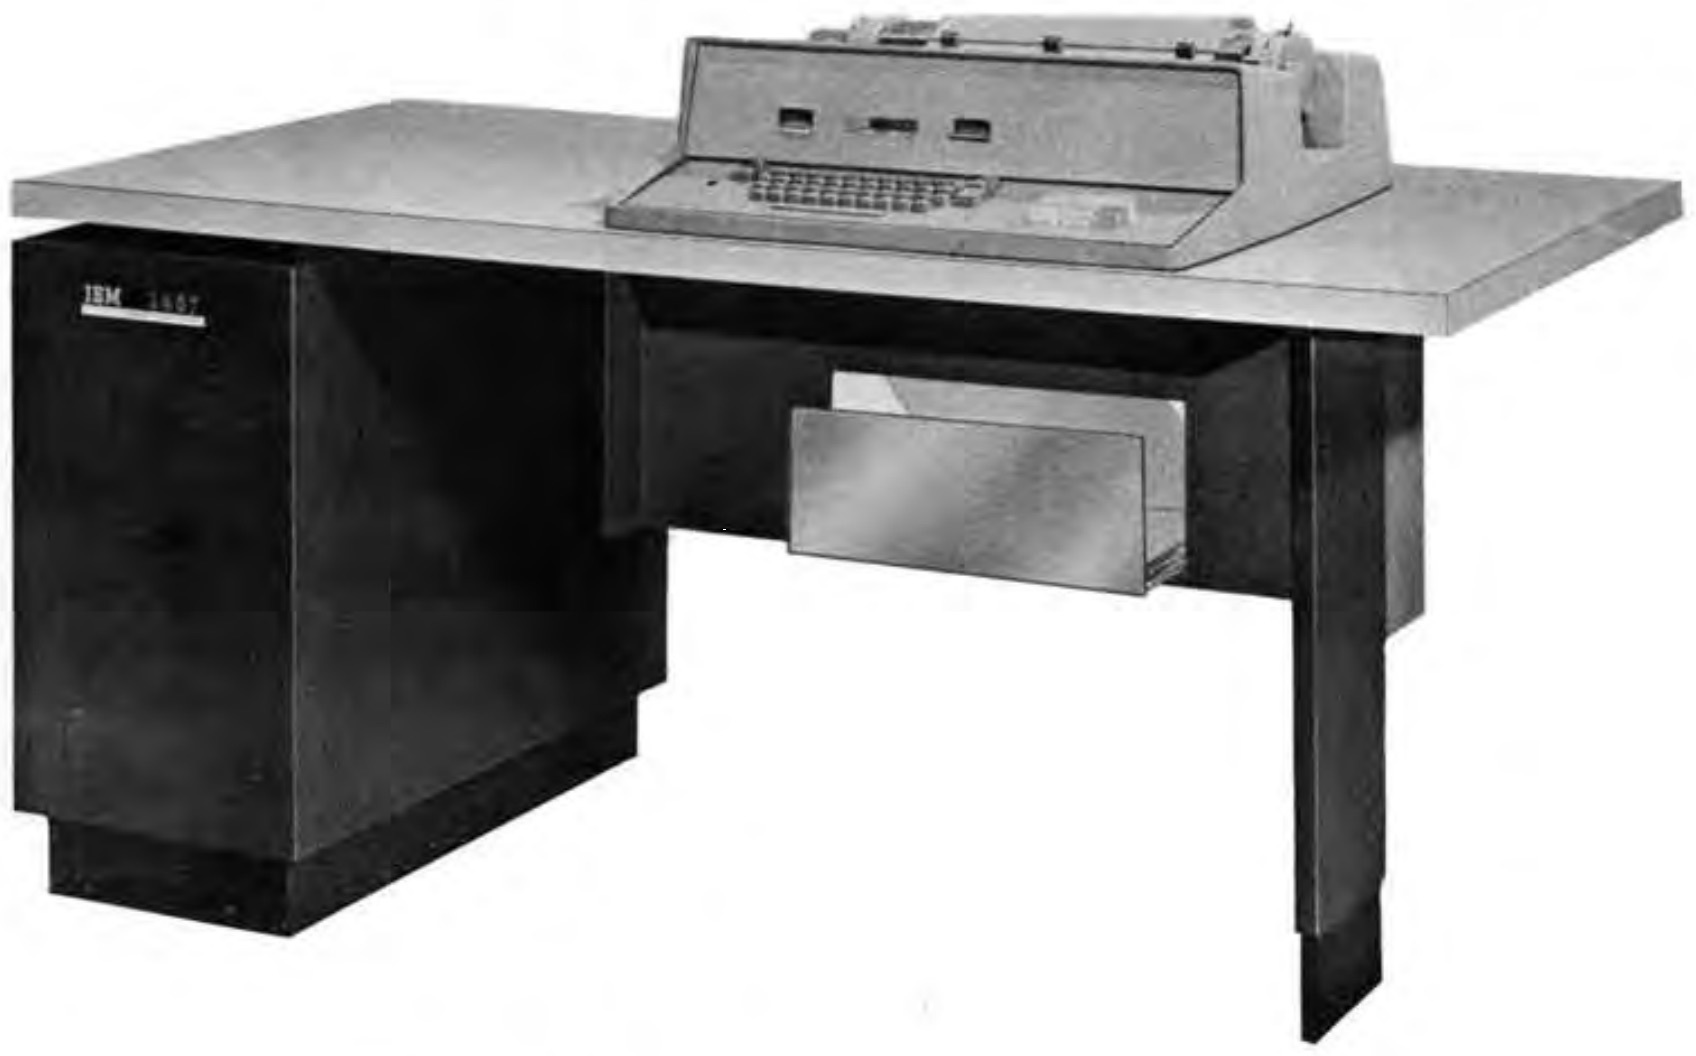 IBM 1407 Control Inquiry Station – Bild: Reference Manual IBM 1401 Data Processing System. IBM. 1962.